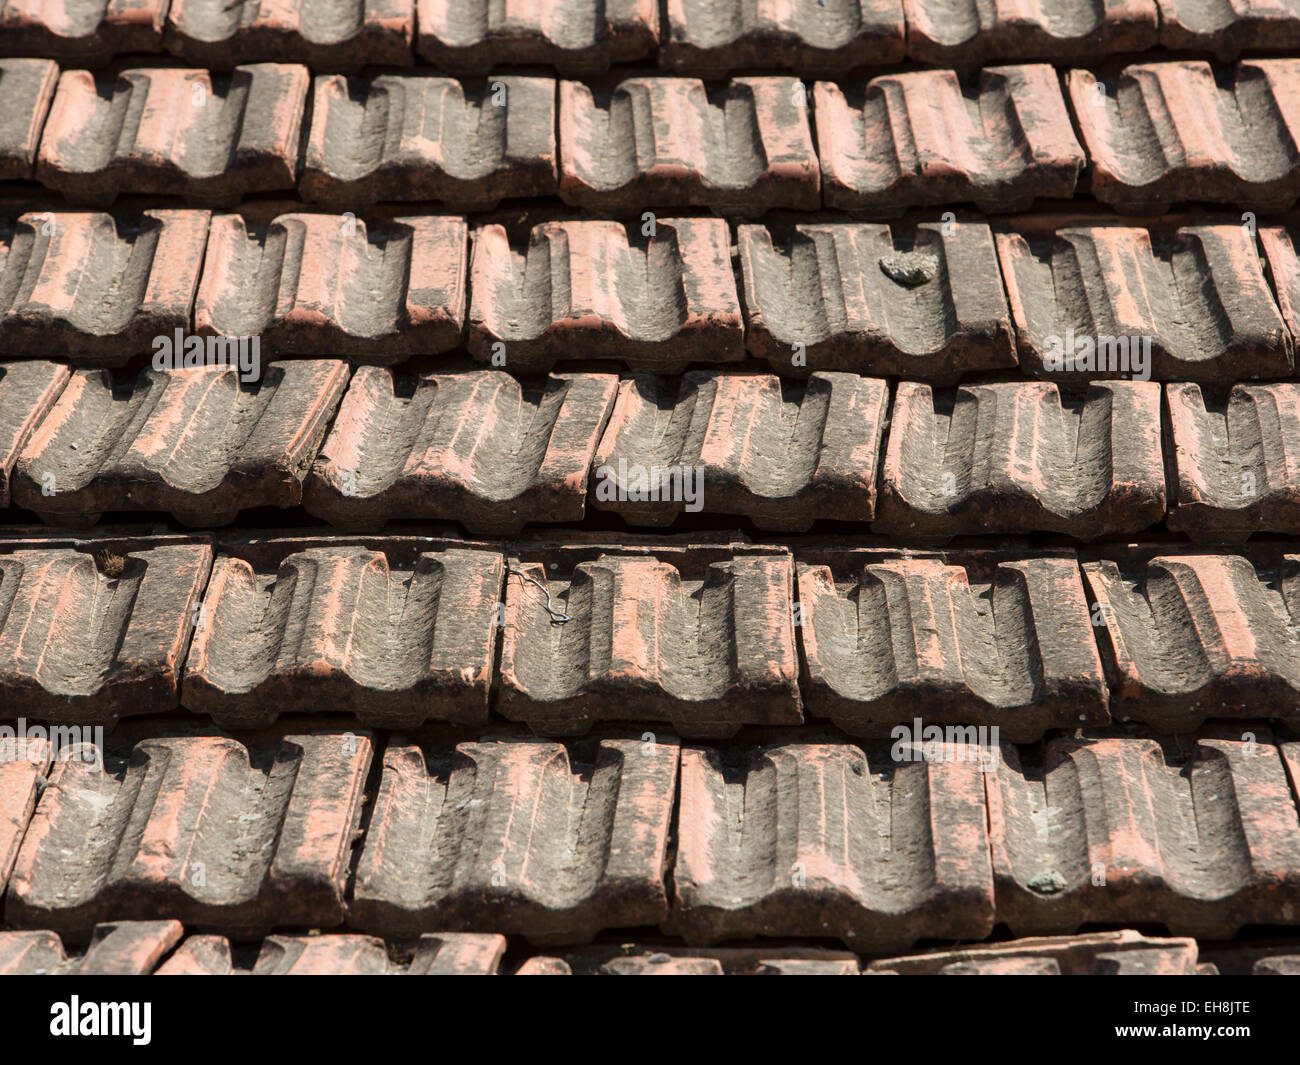 Sirince, Turkey village old tile roof shingles Stock Photo